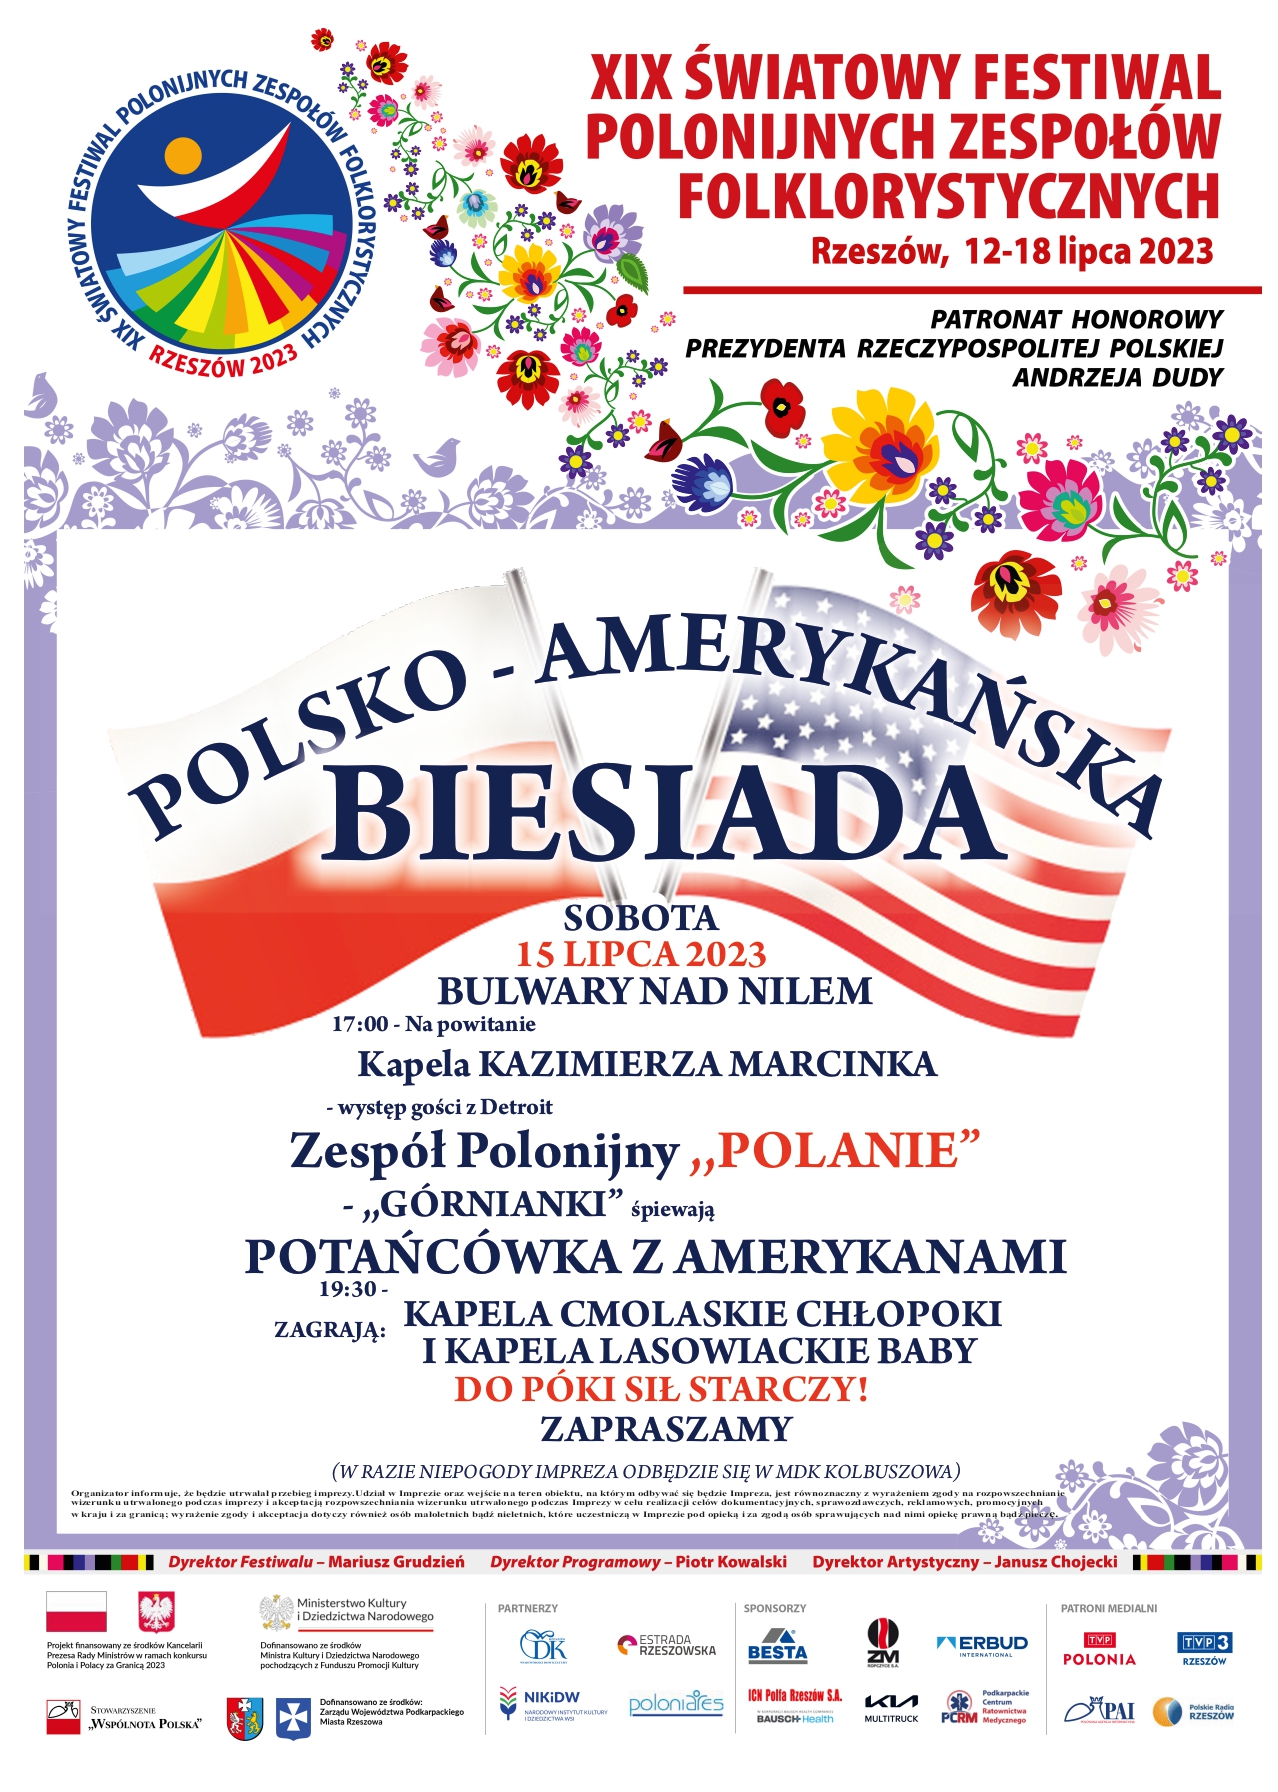 biesiada_polsko_amerykanska